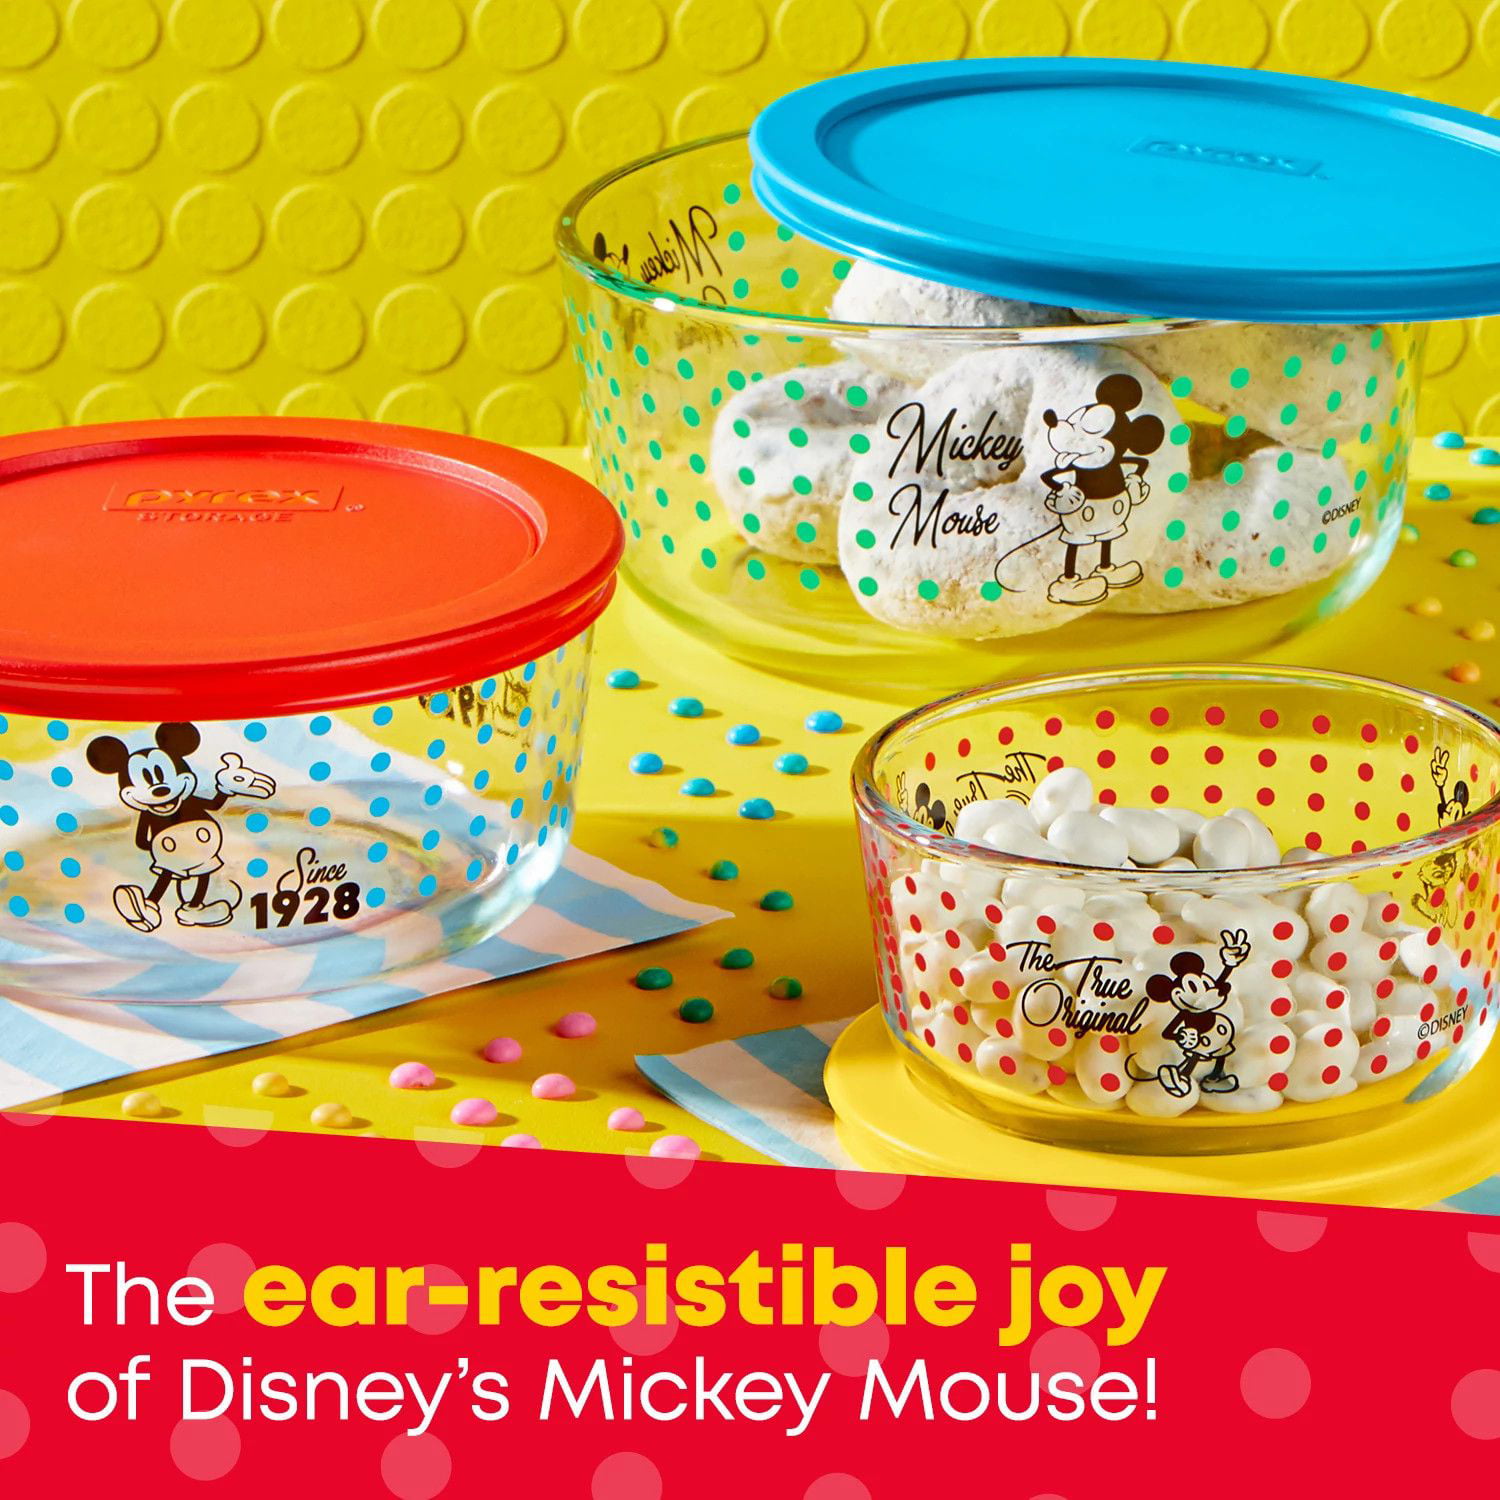 Pyrex Disney Mickey Mouse 8Pc Glass Food Storage Set